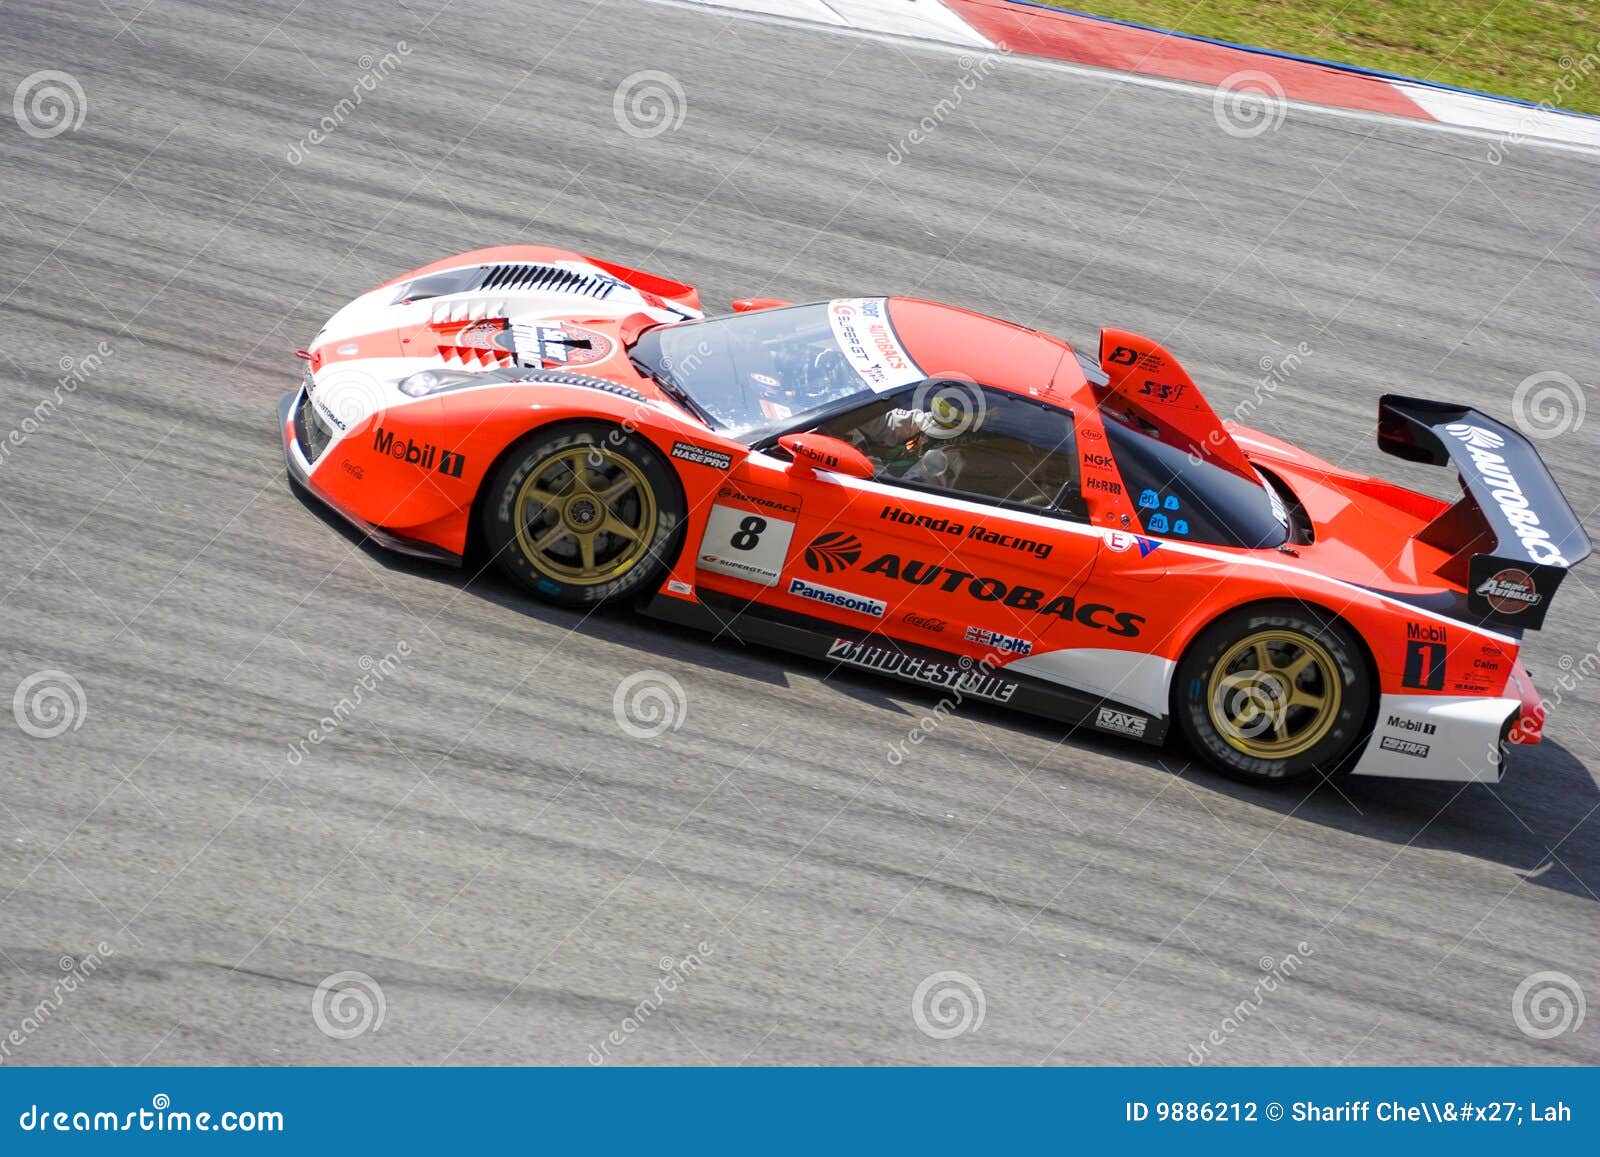 Japan Super GT 2009 - Autobacs Racing Team Aguri Editorial 